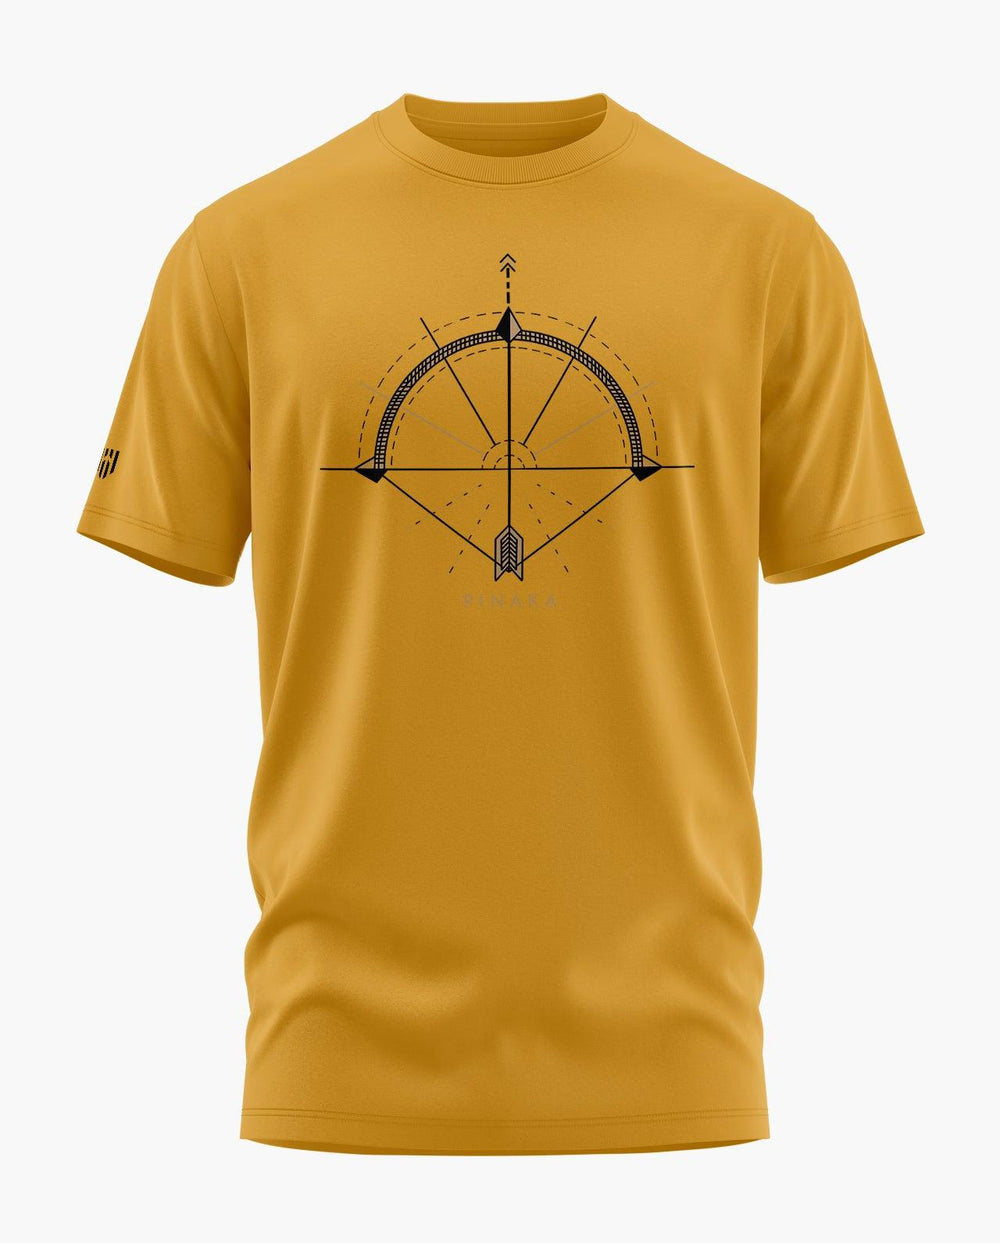 PINAKA T-Shirt - Aero Armour